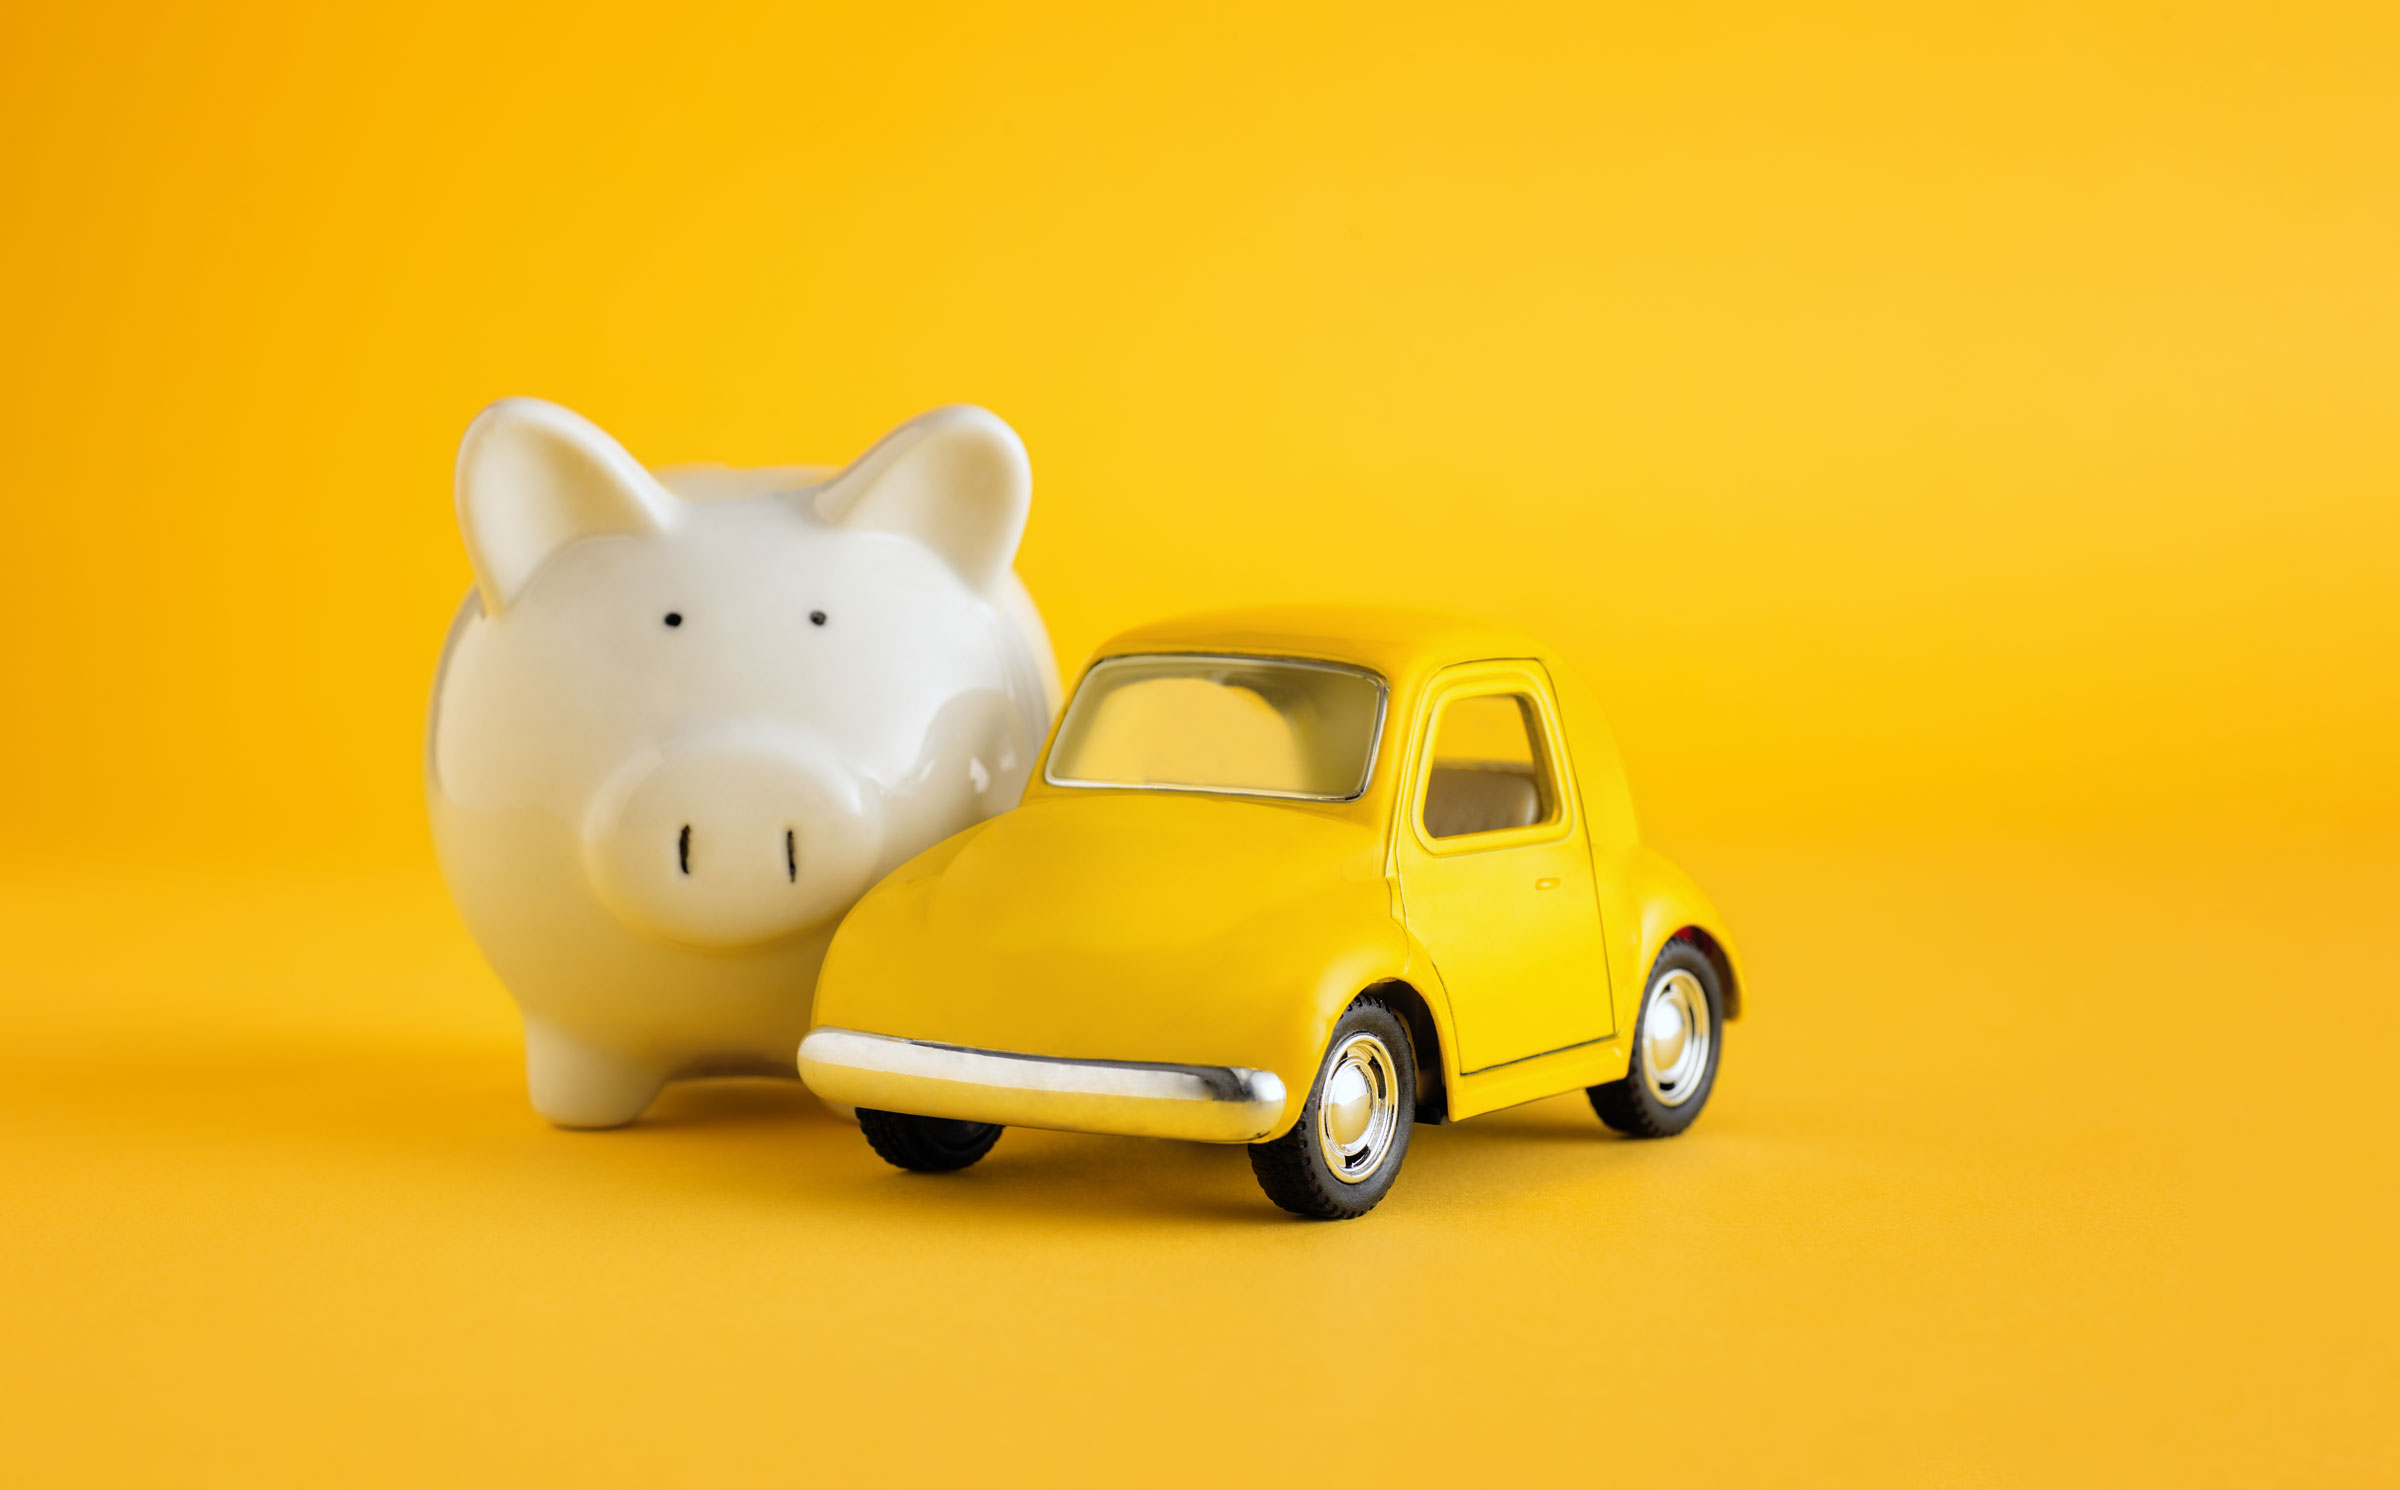  A white piggy bank beside a yellow toy car.